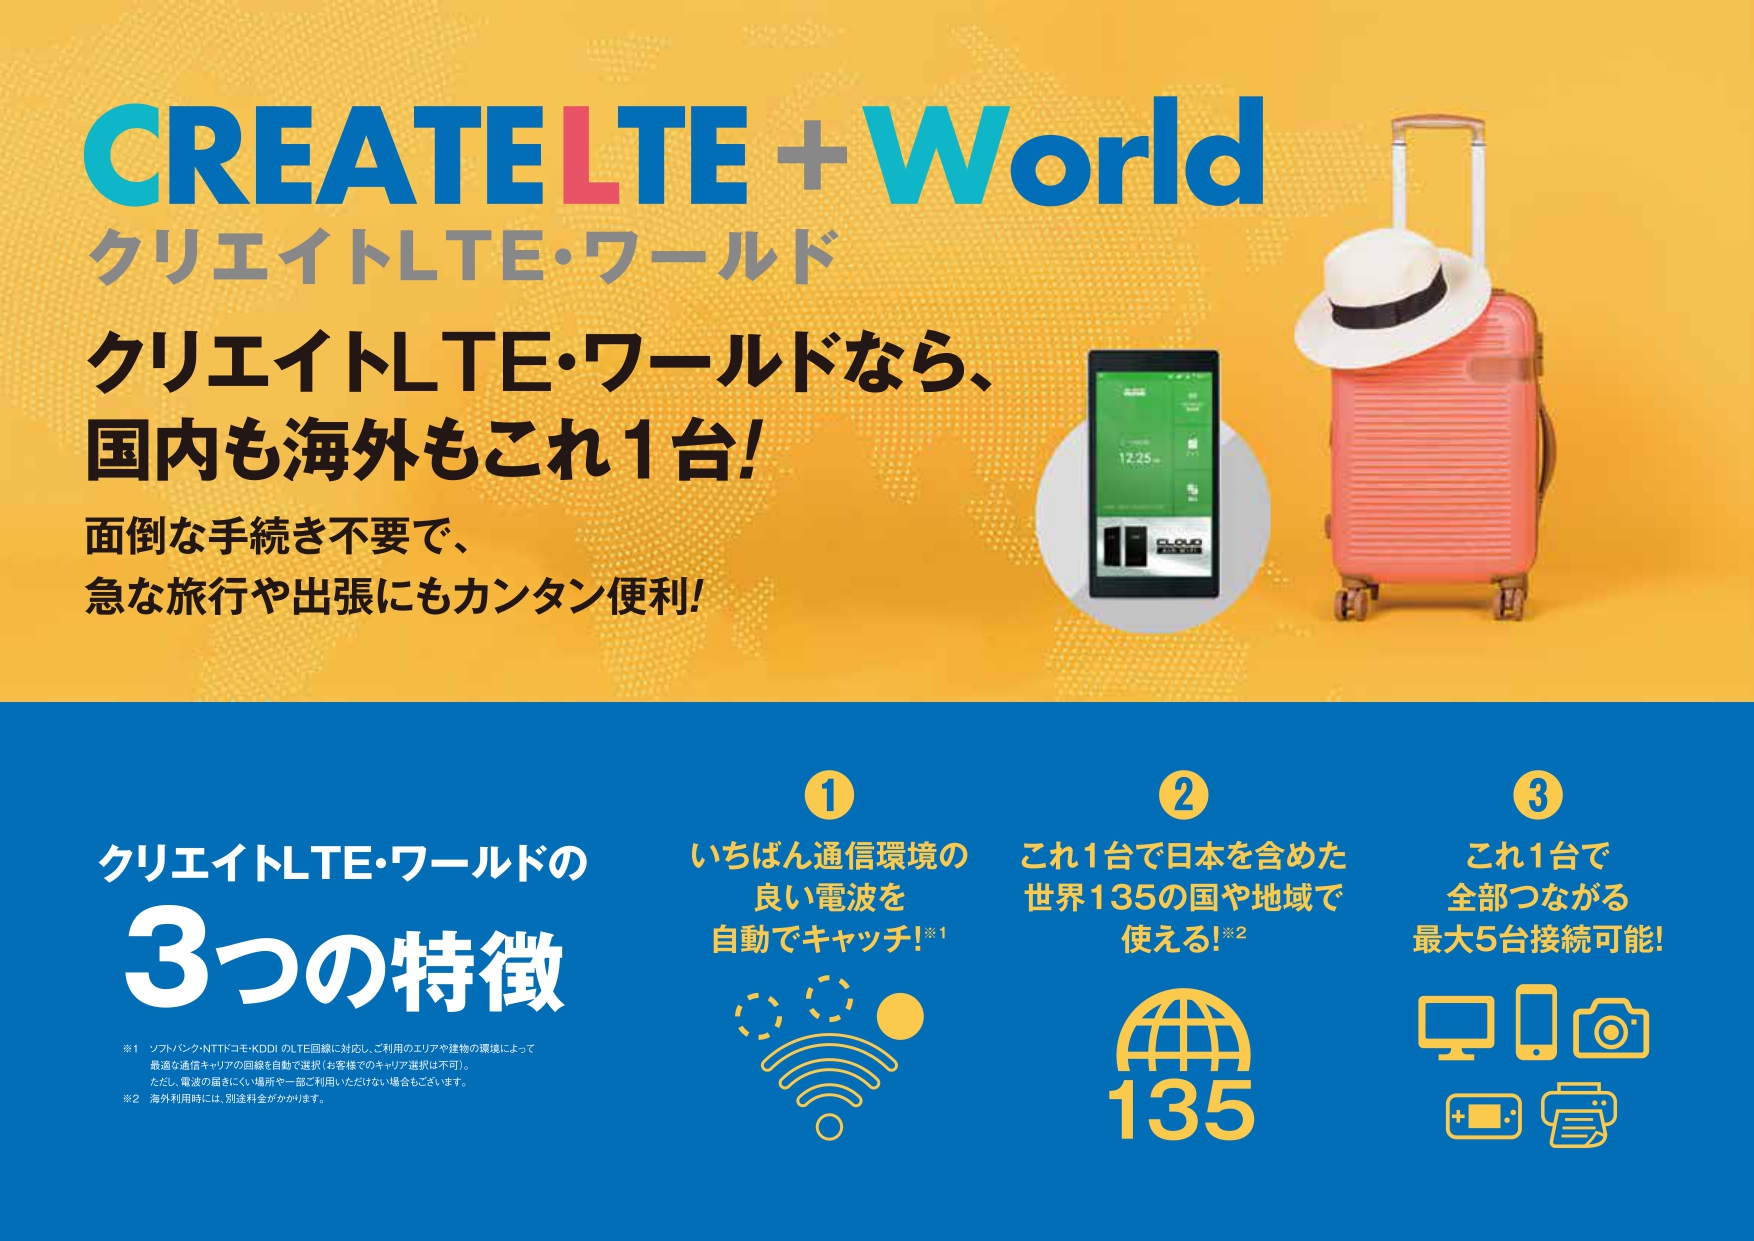 CREATE LTE+World